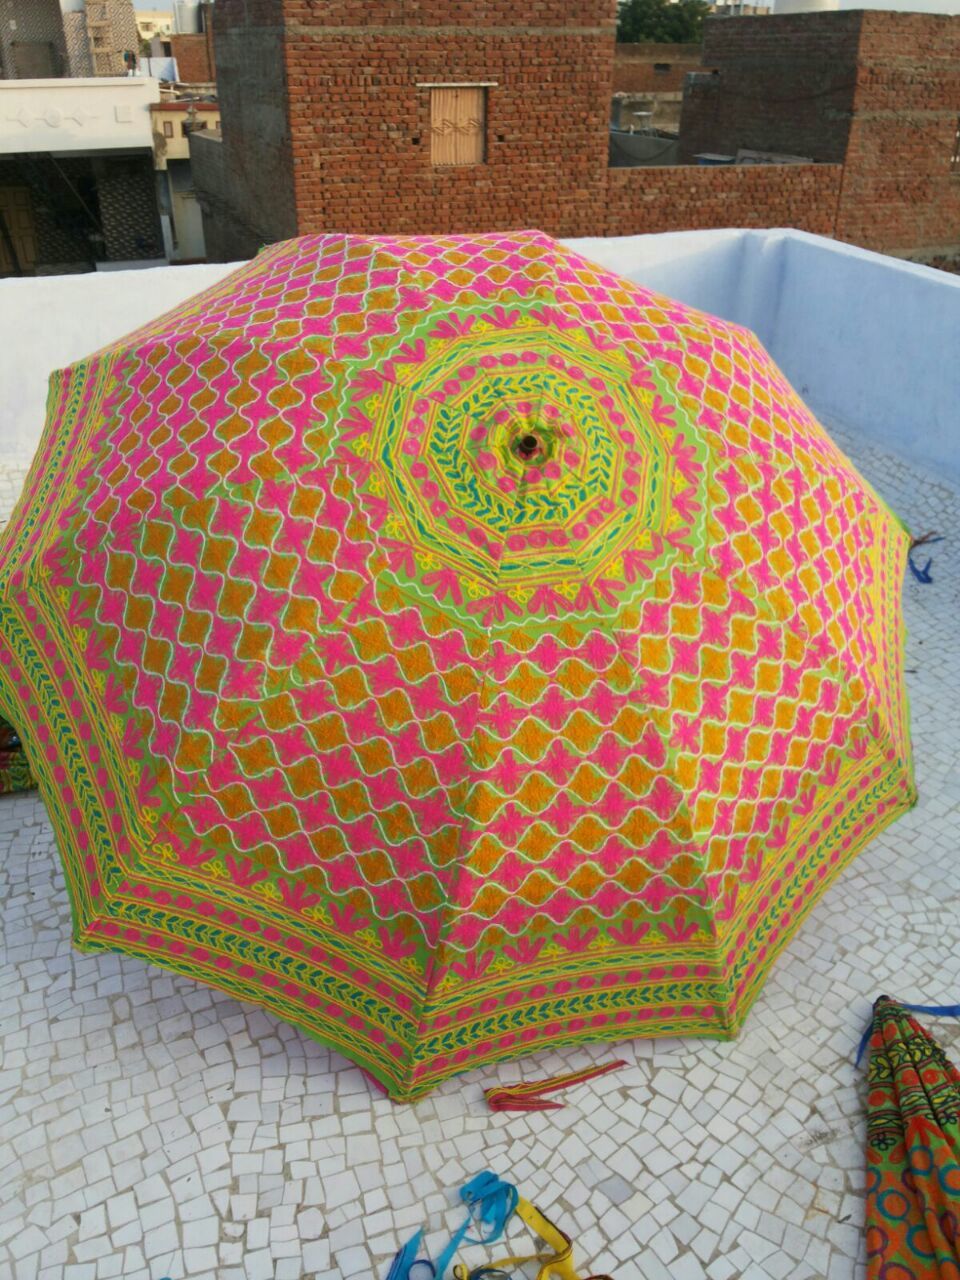 Rajasthani Embroidery Garden Umbrella